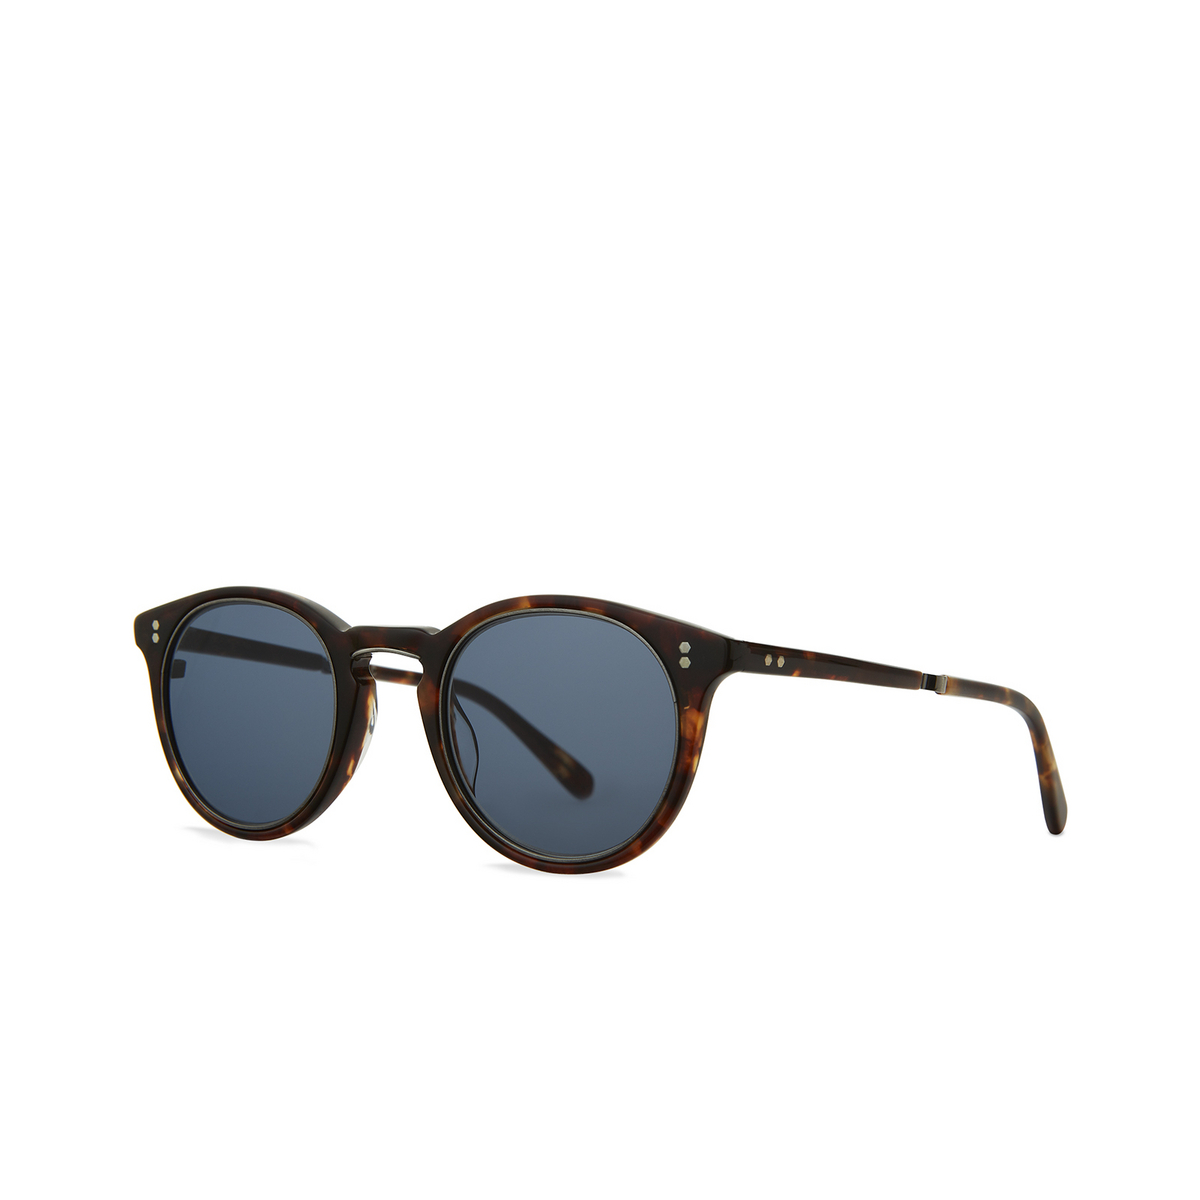 Mr. Leight® Round Sunglasses: Crosby S color Maple - Antique Platinum / Blue Mpl-antplt/blu - three-quarters view.